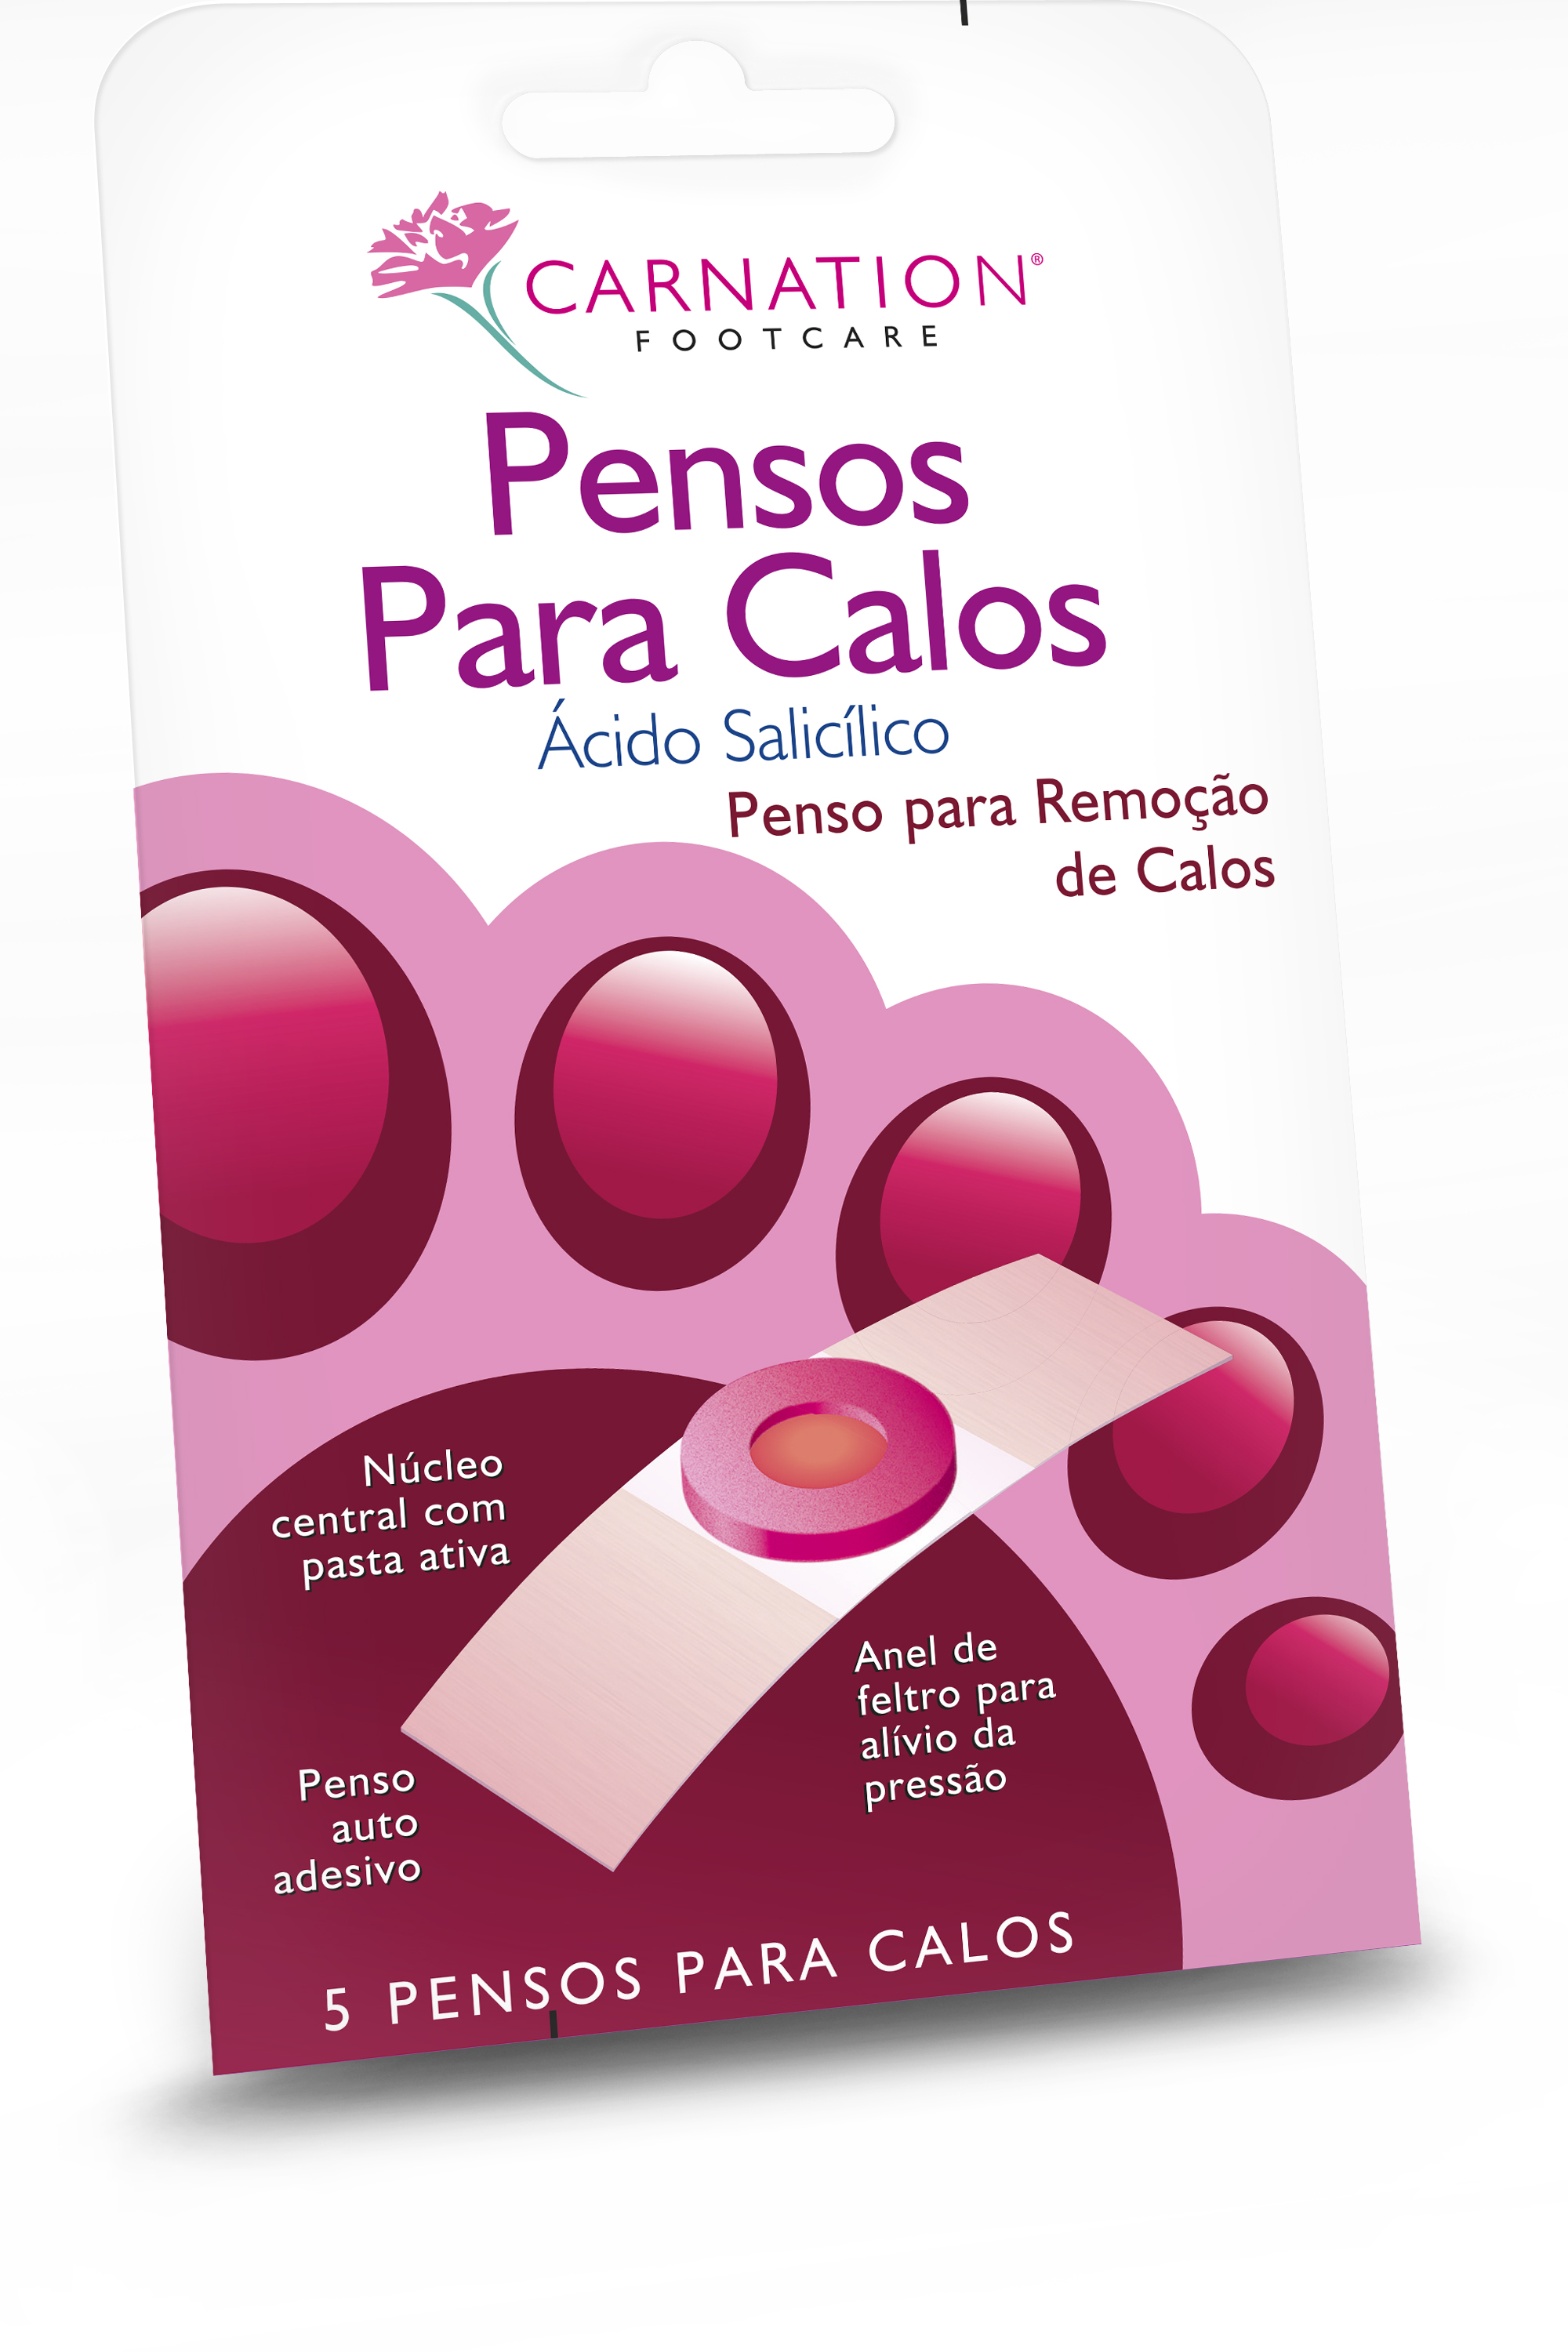 Portuguese Language Packaging Design